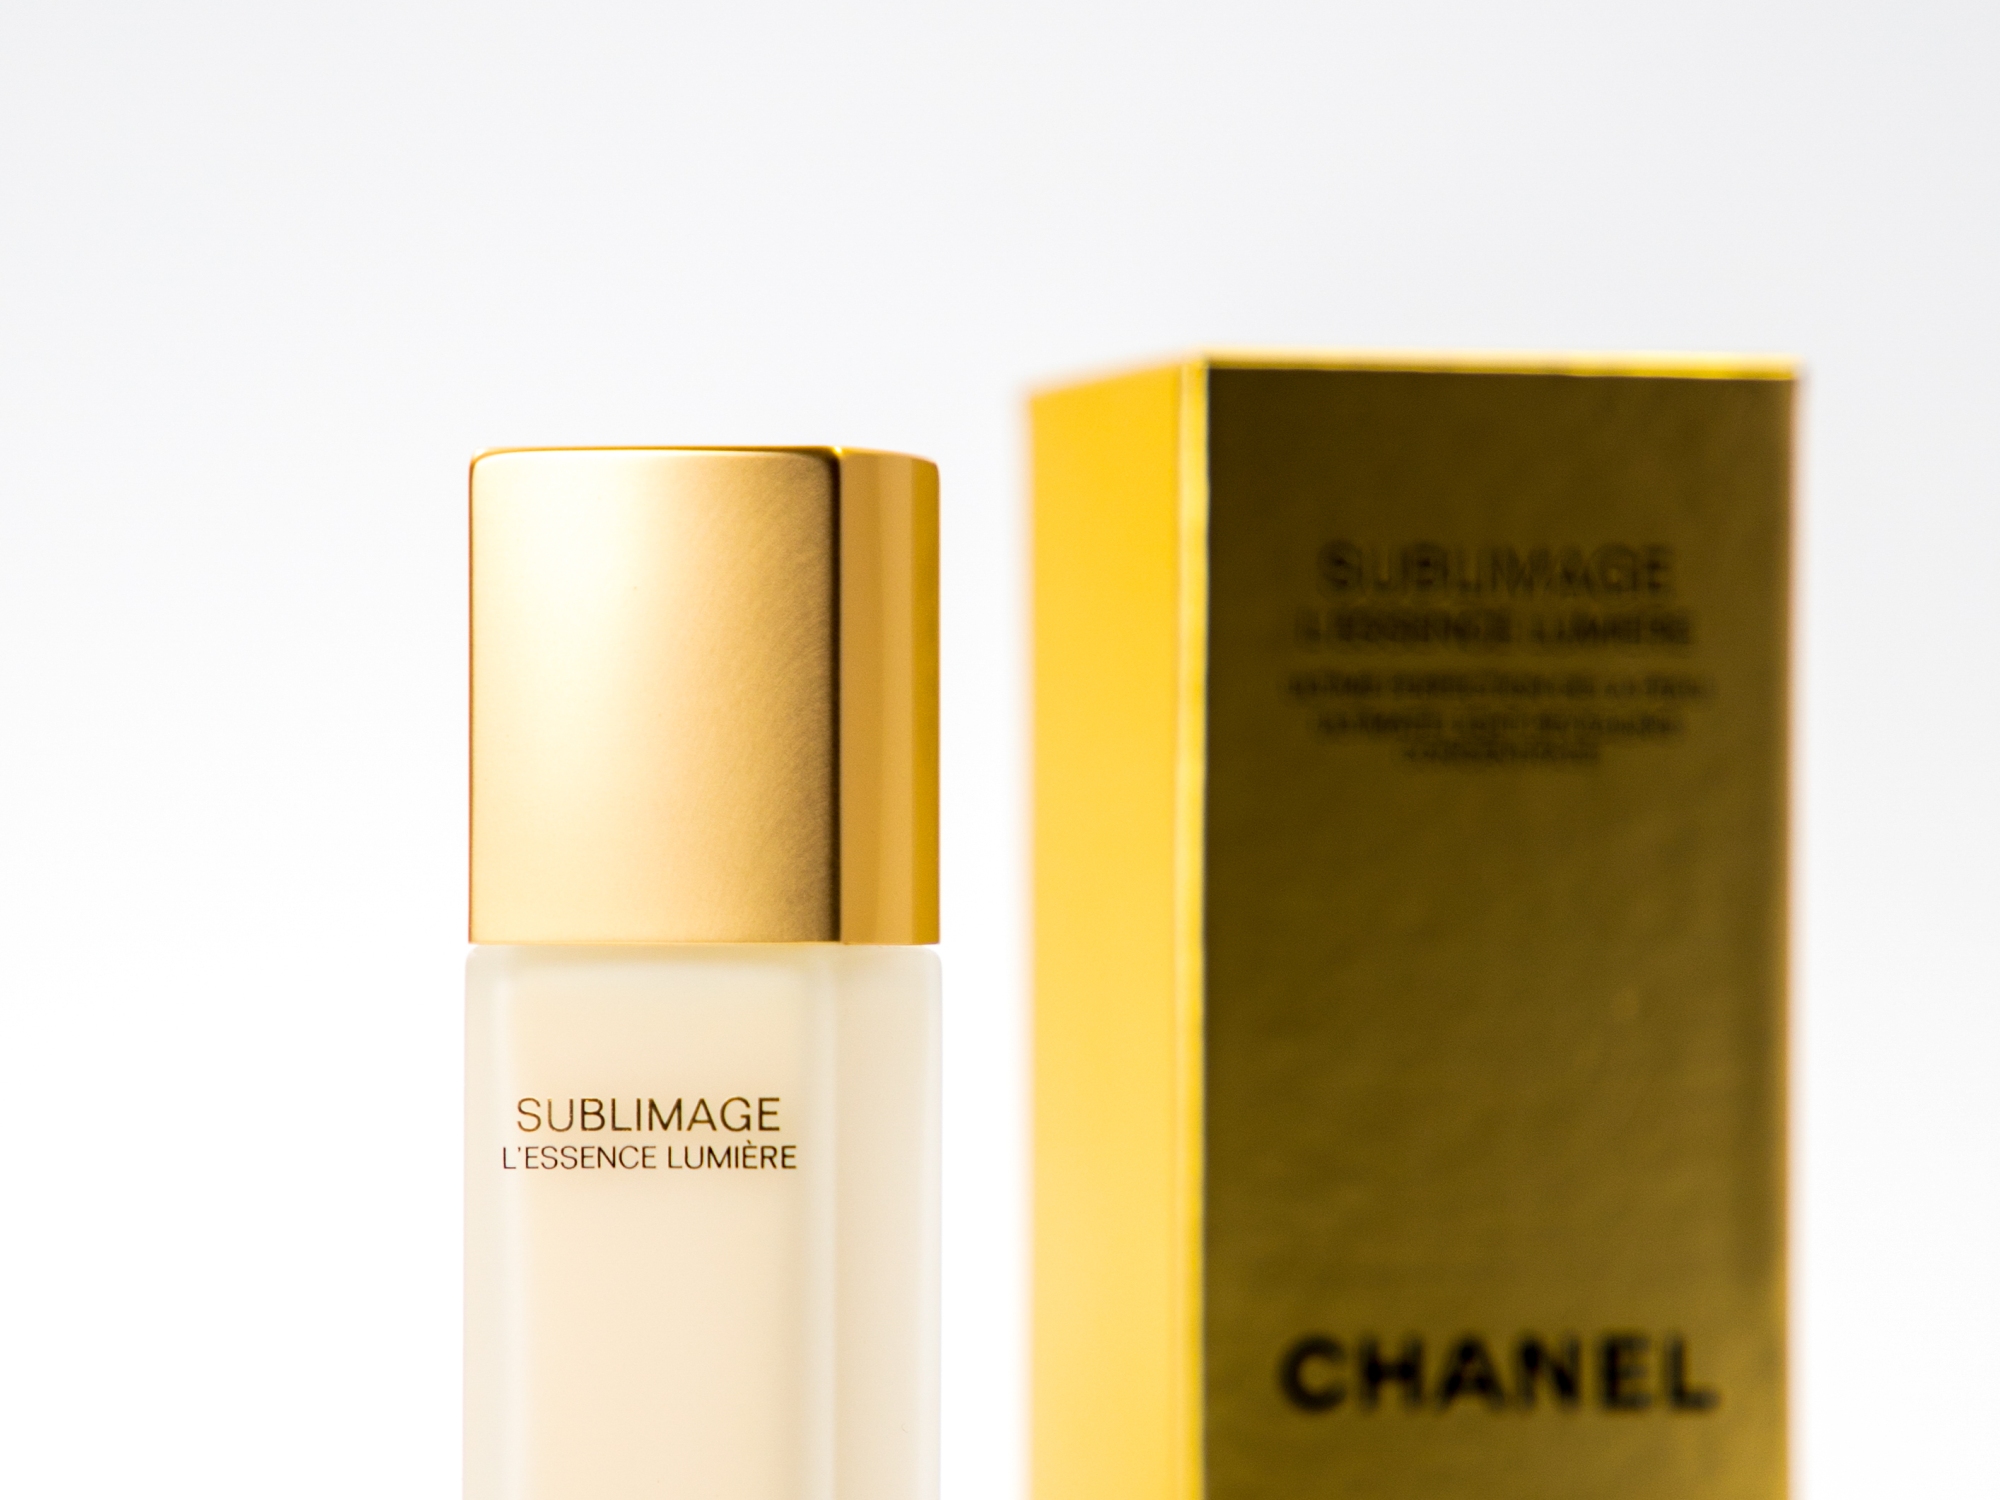 The NEW Chanel SUBLIMAGE L'Essence Lumiere Serum – www.rjmstyle.com